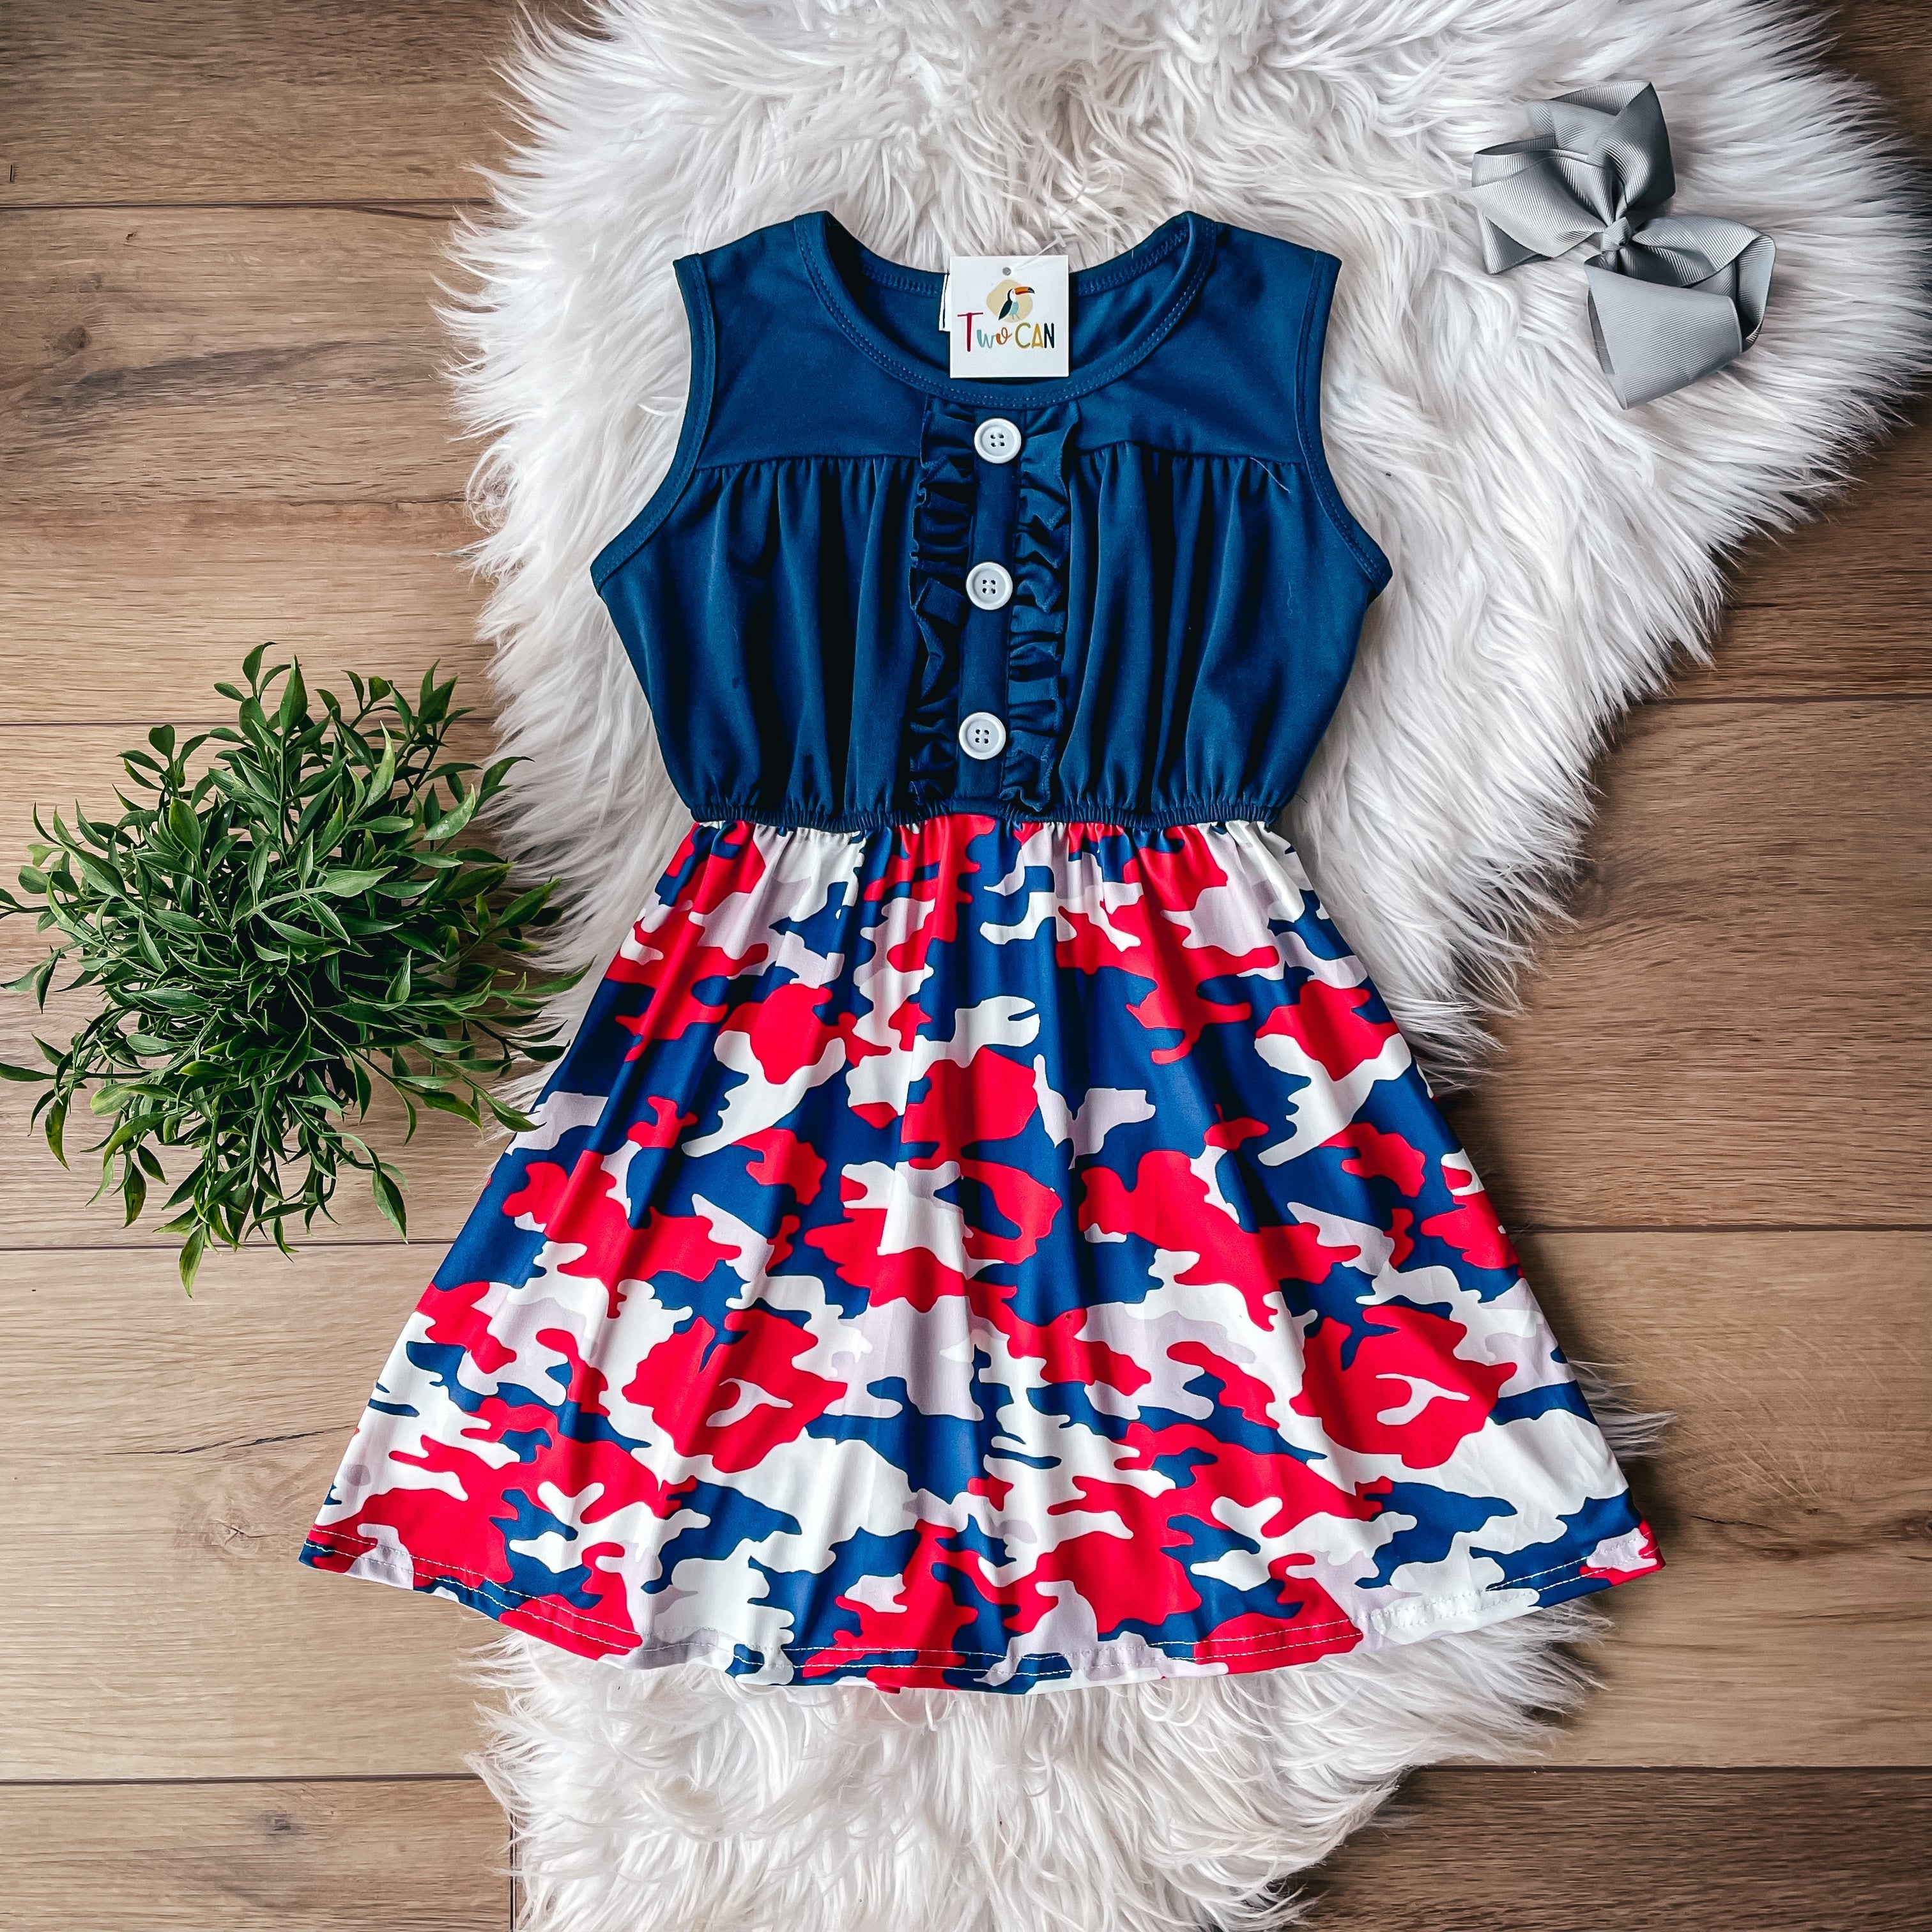 Americana Camo Dress by Twocan